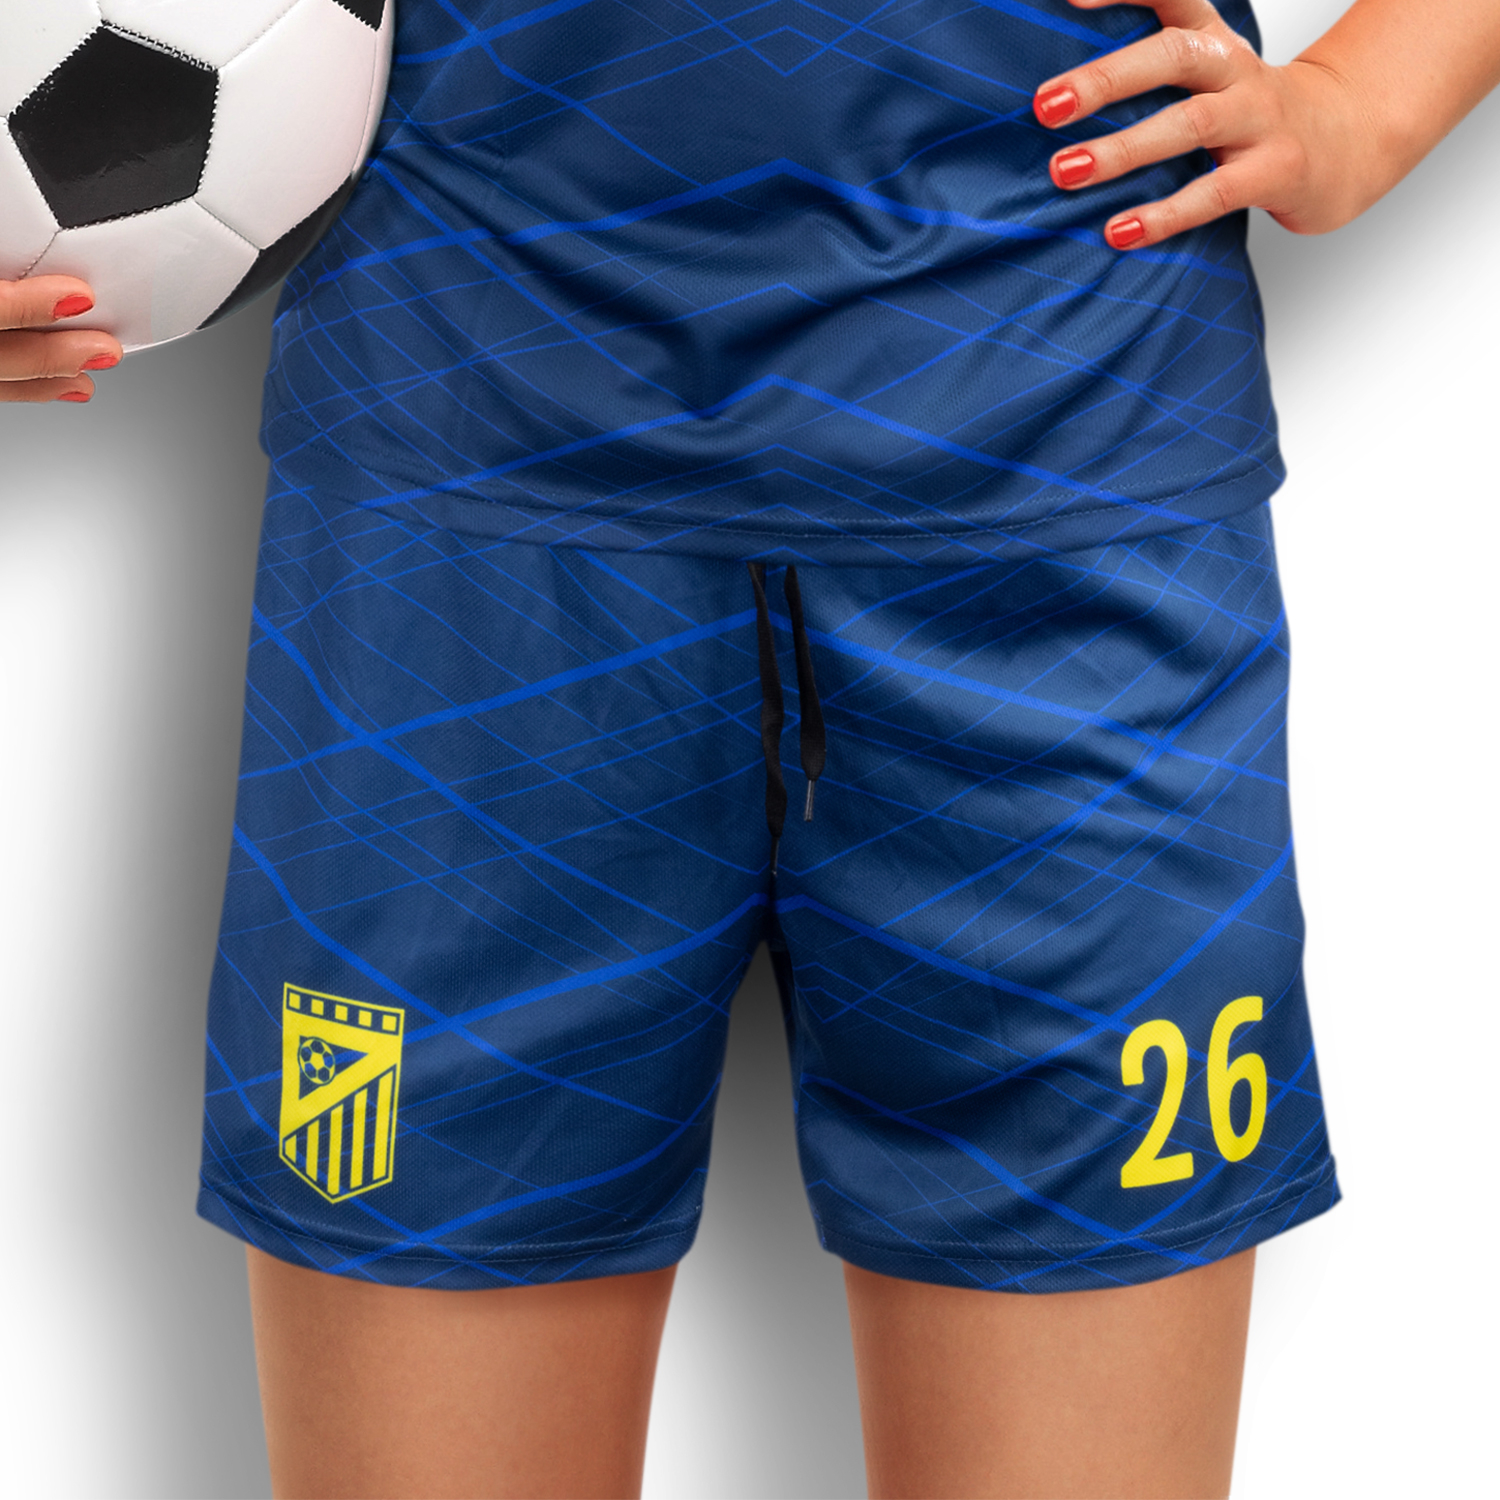 Teamwear Custom Womens Soccer Shorts custom